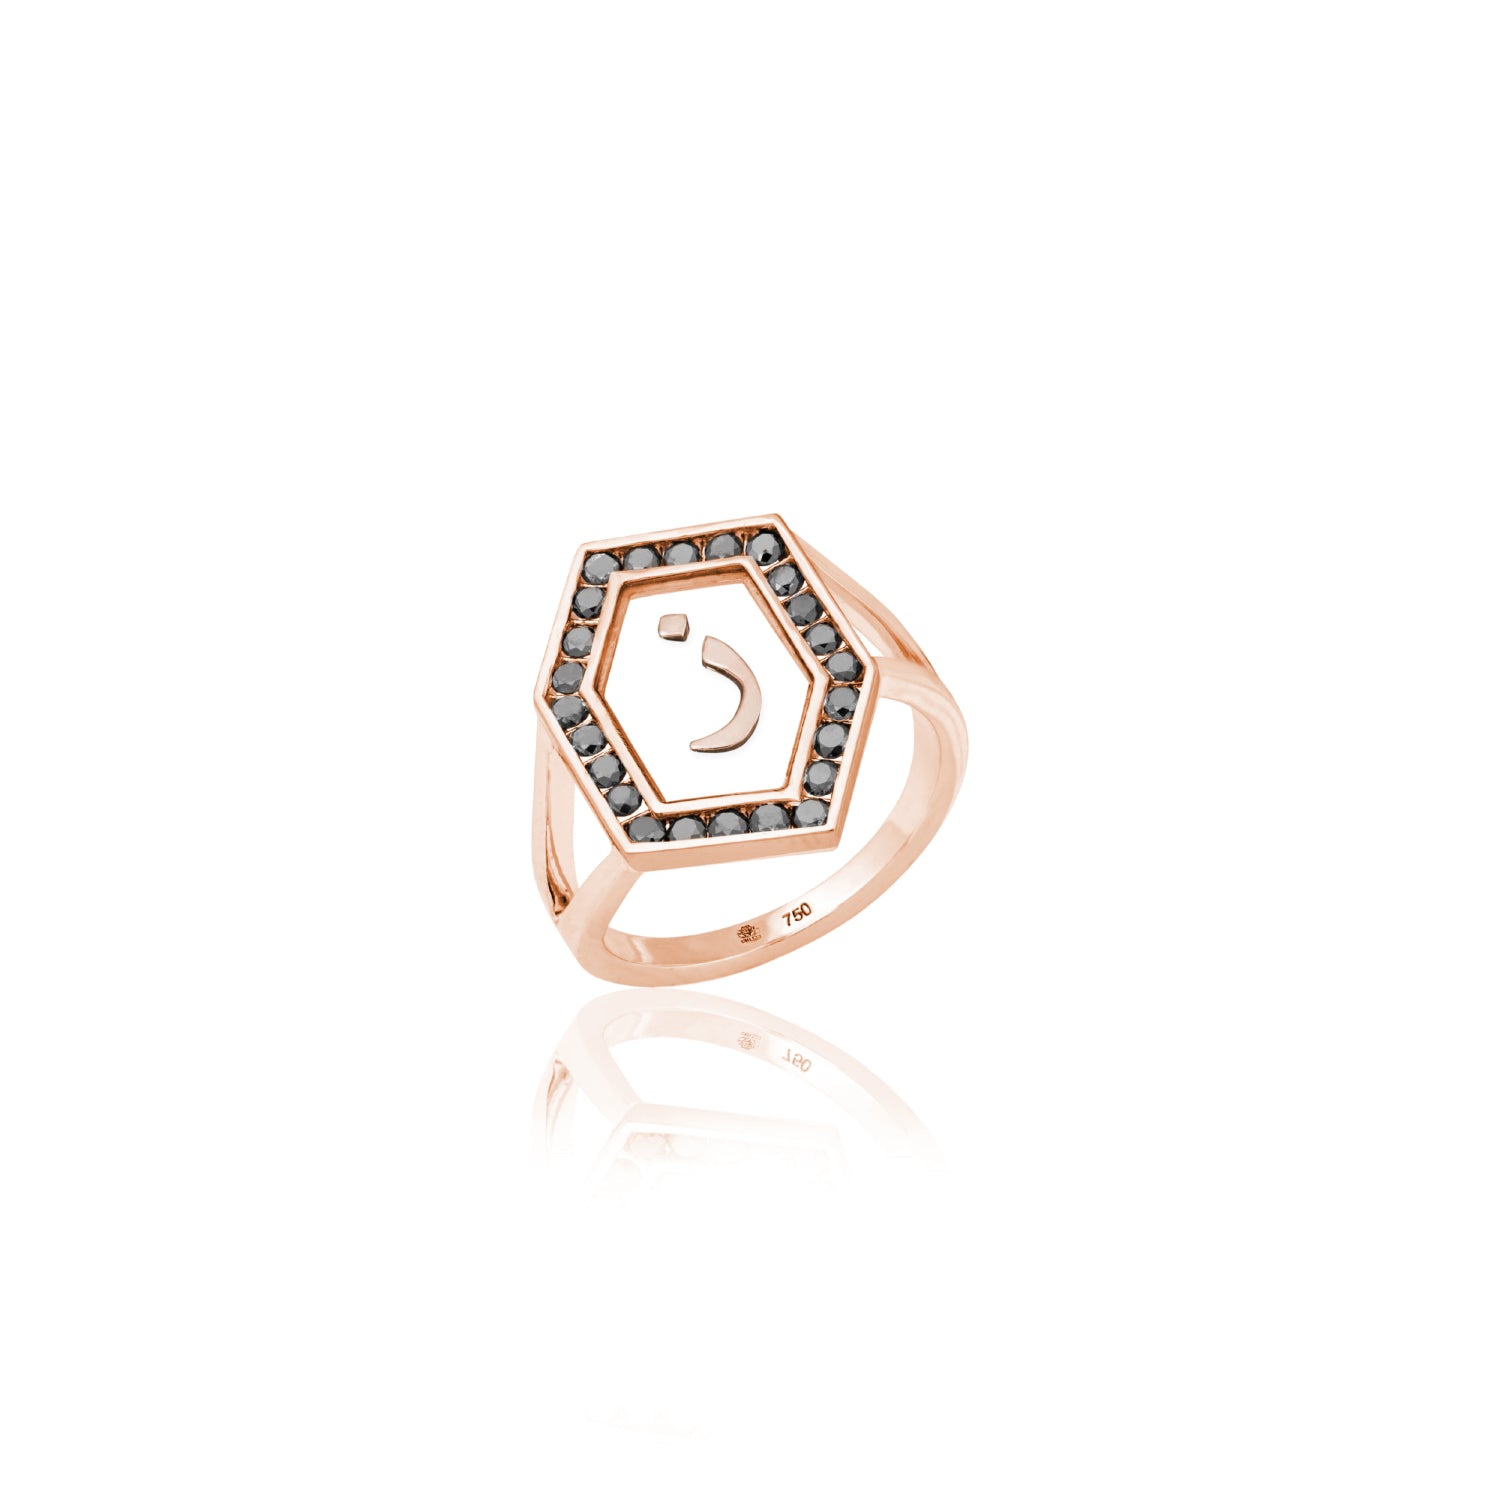 Qamoos 1.0 Letter ز Black Diamond Ring in Rose Gold